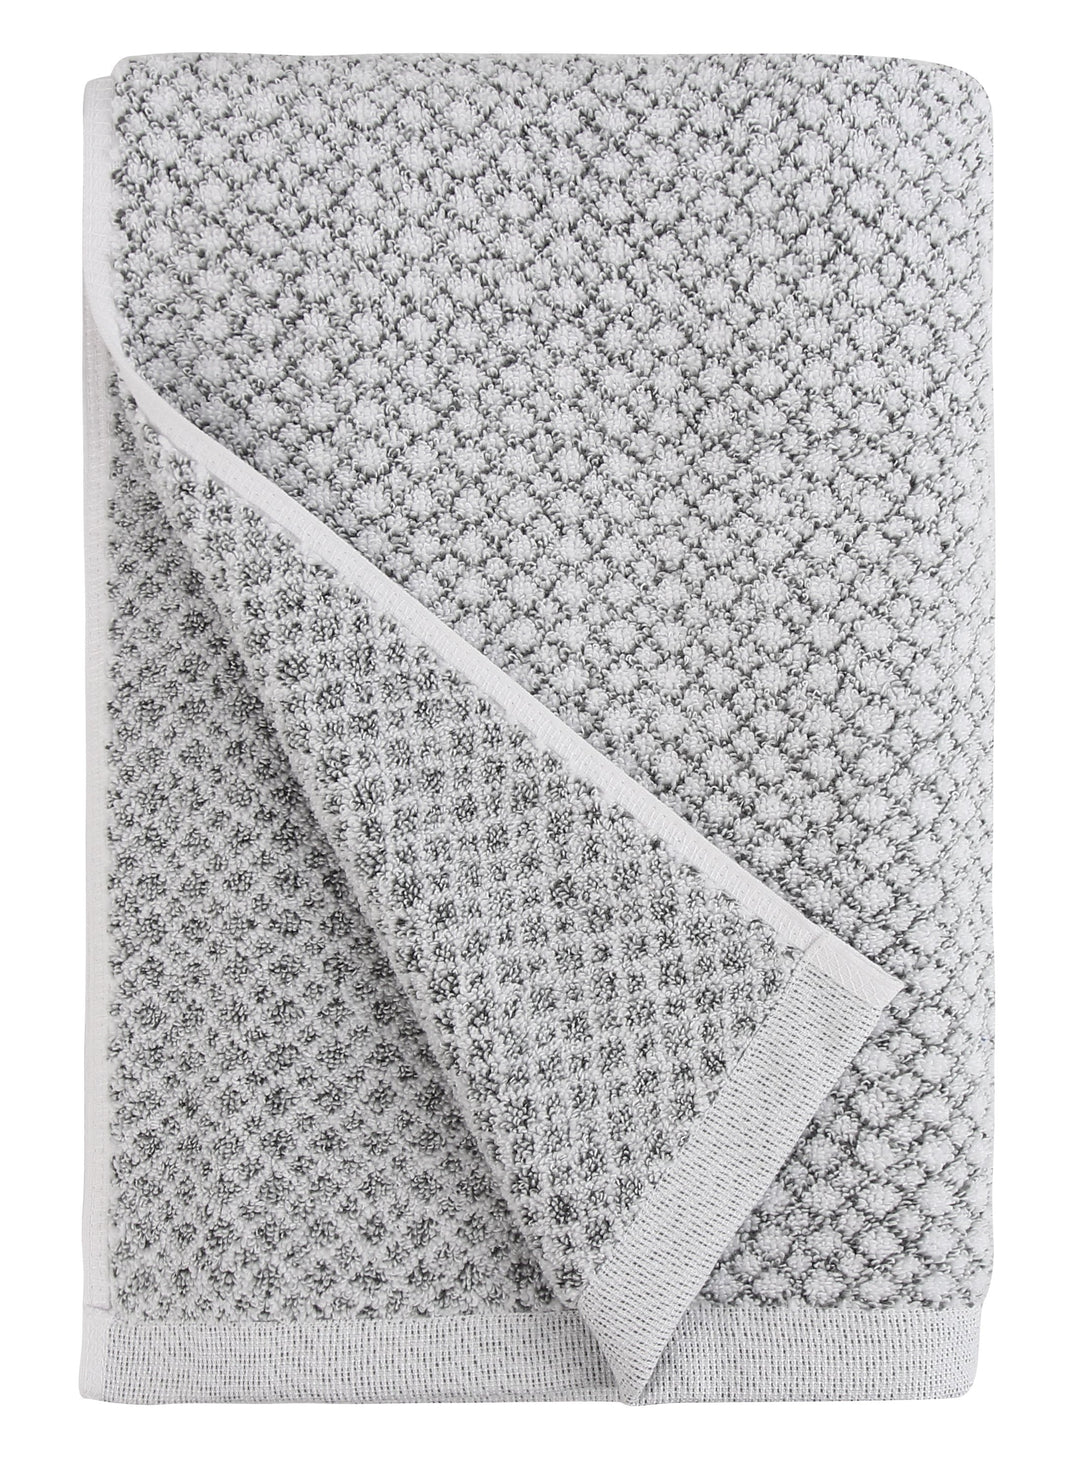 Flat Loop 6 Piece Bath Towel Set, Ash (Light Grey) – The Everplush Company